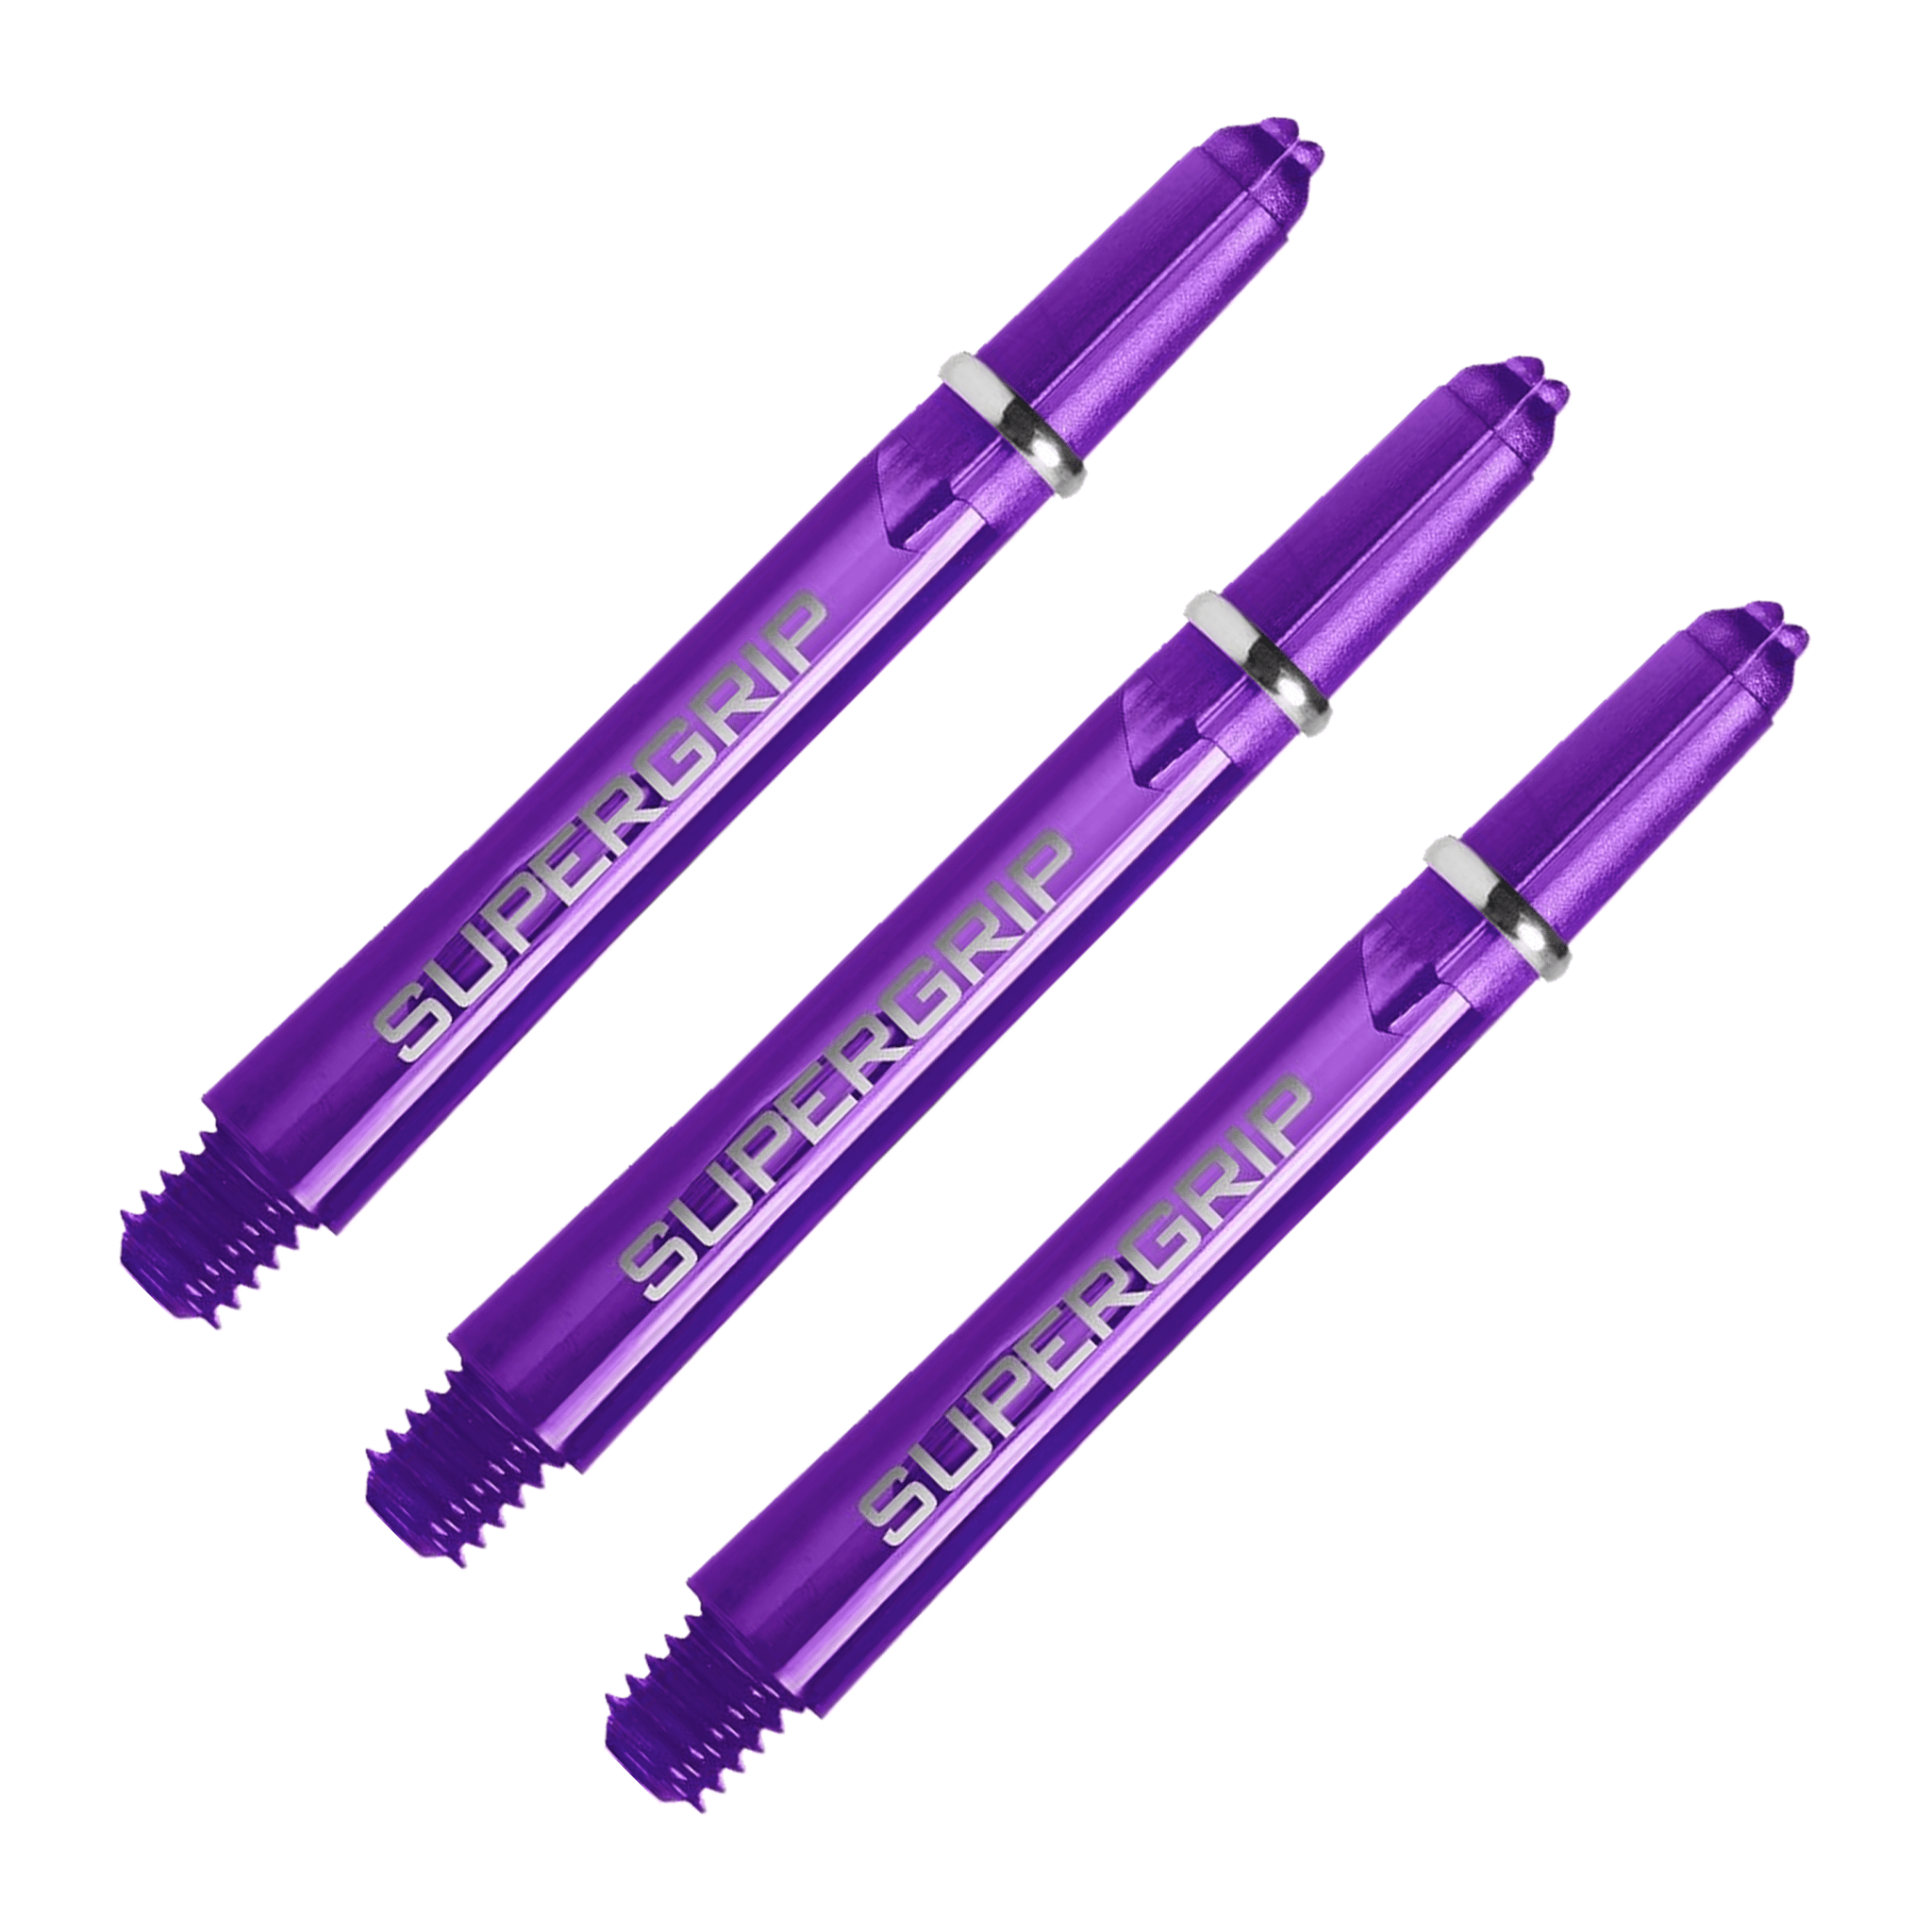 Harrows Supergrip - Nylon Dart Shafts Medium (45mm) / Dark Purple Shafts